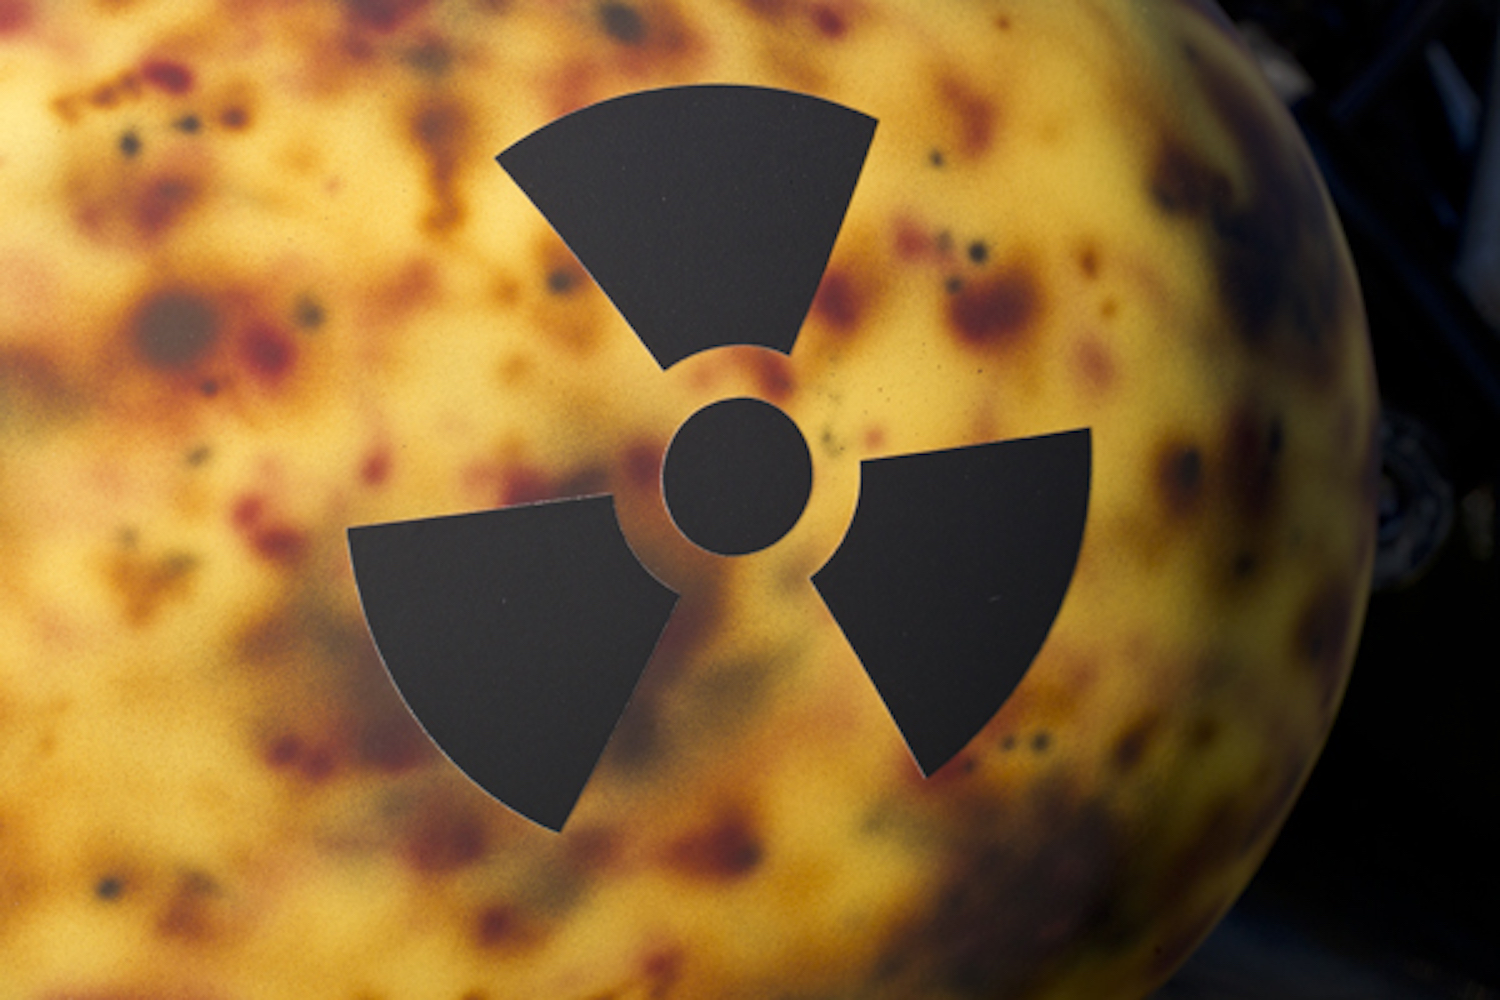 a radioactive symbol